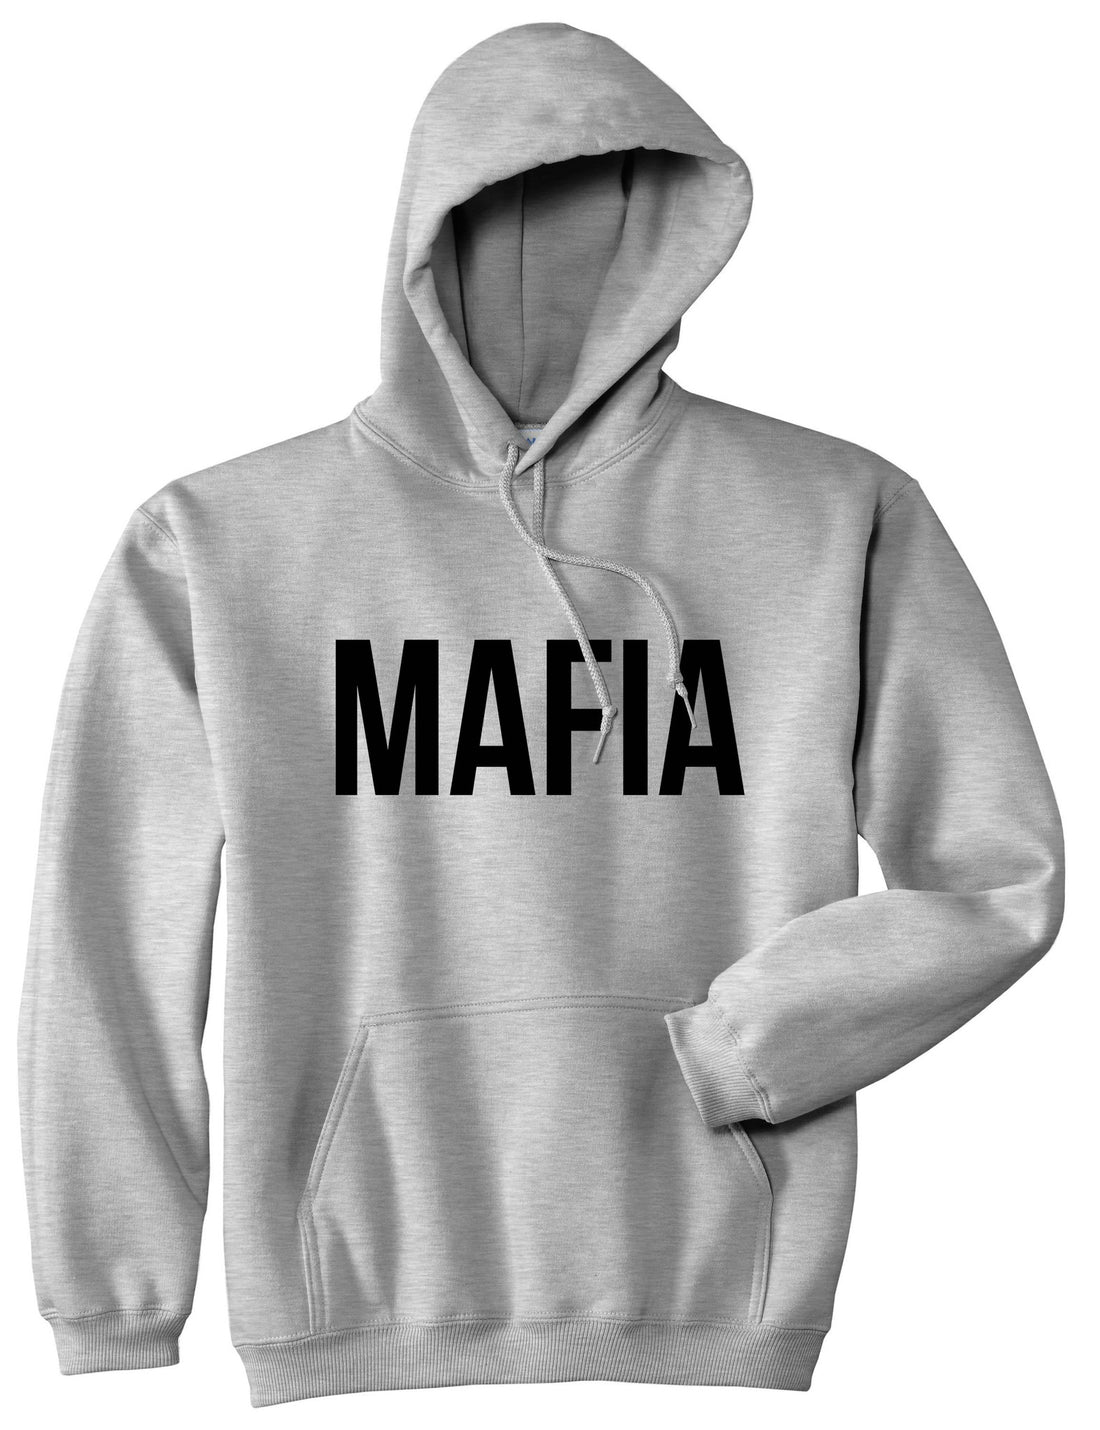 Mafia Junior Italian Mob  Boys Kids Pullover Hoodie Hoody in Grey By Kings Of NY